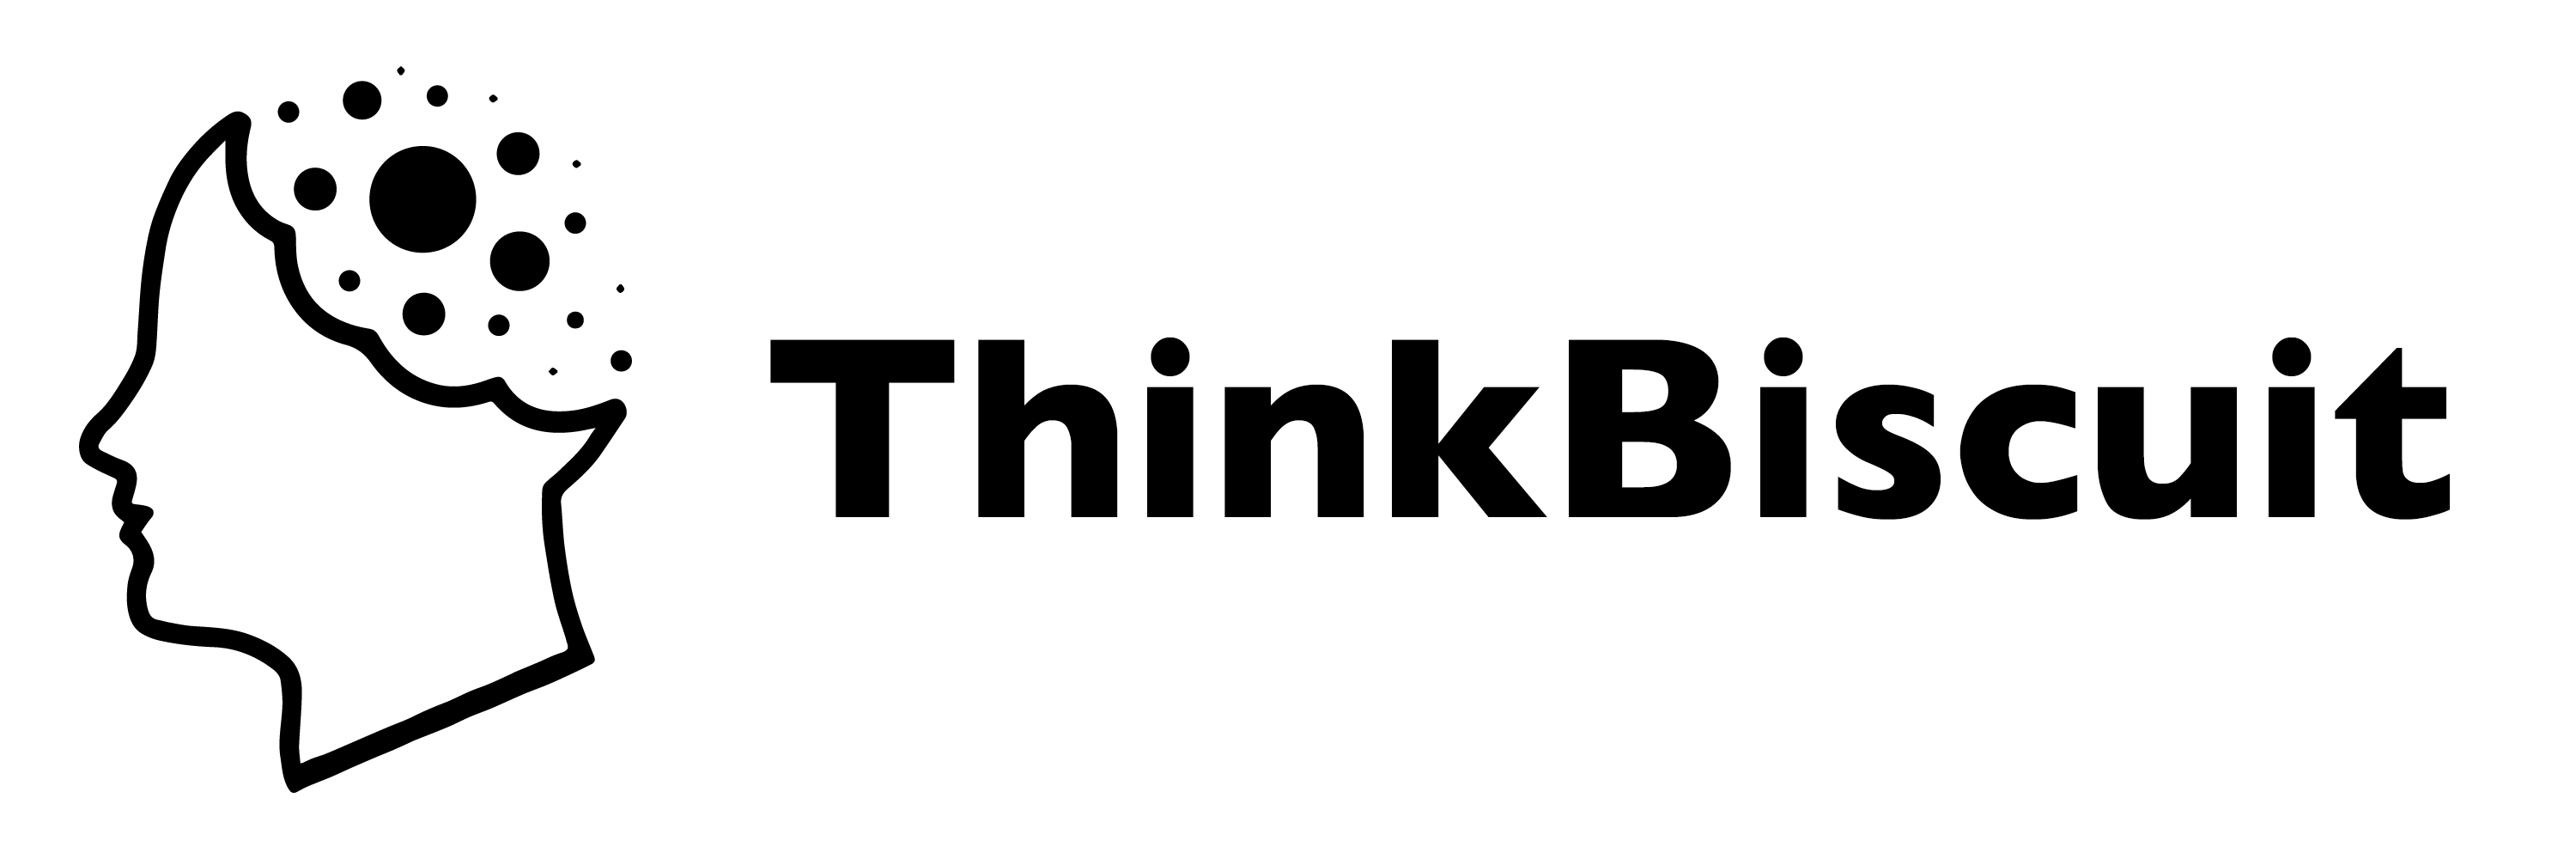 ThinkBiscuit-Horizontal-Logo